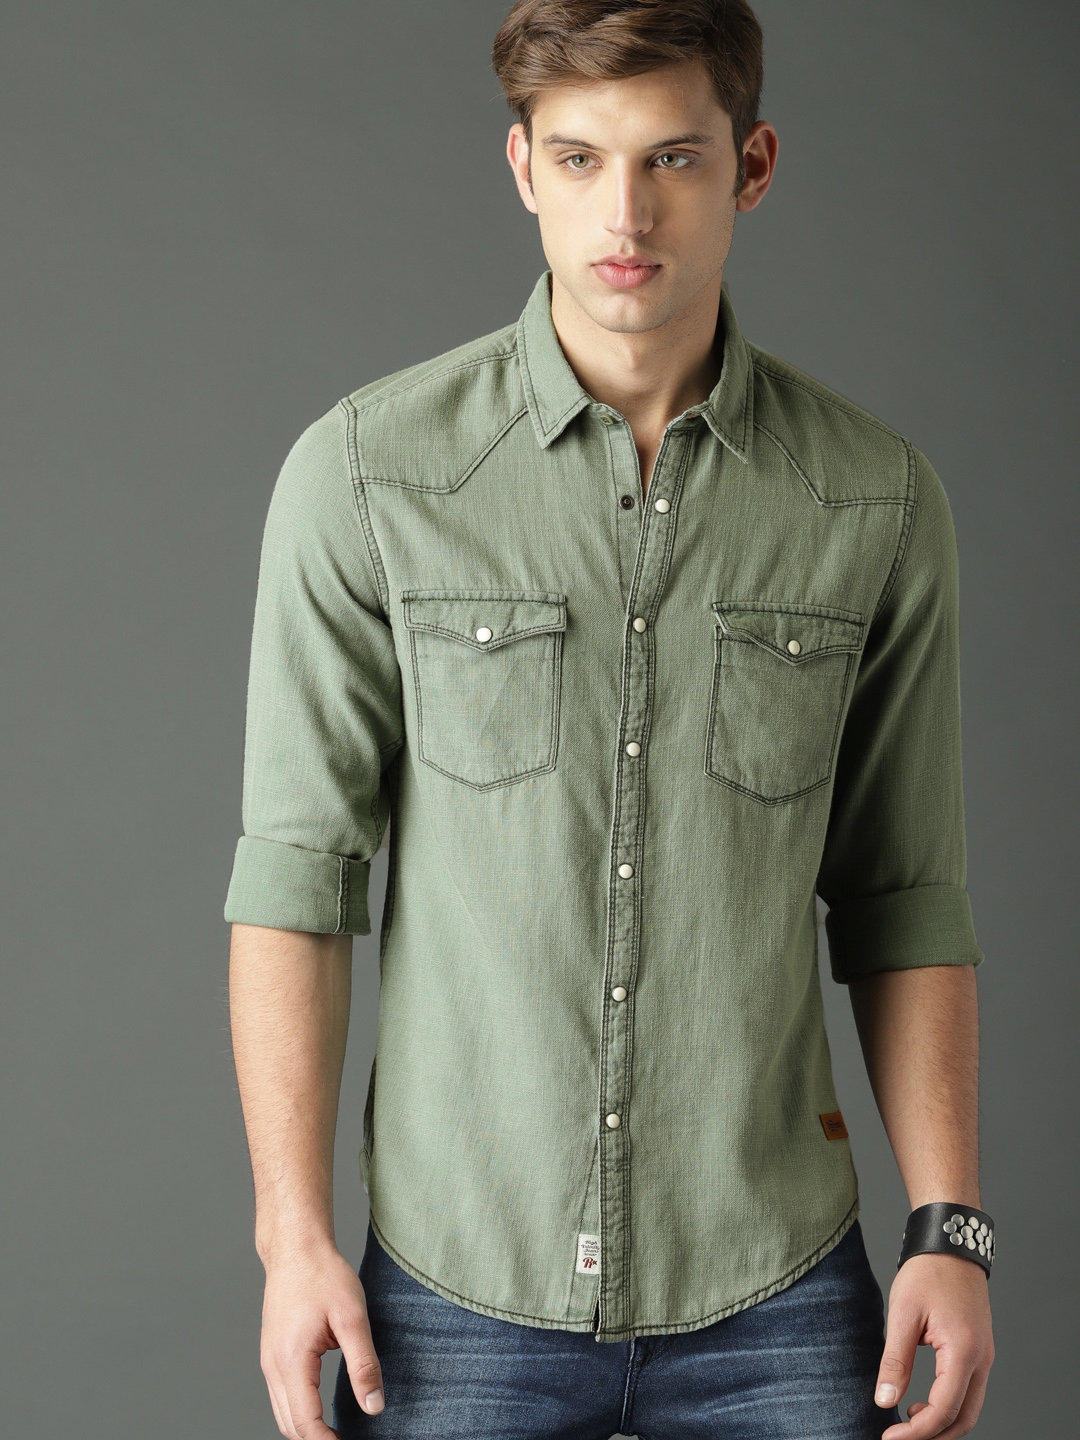 green jean shirt